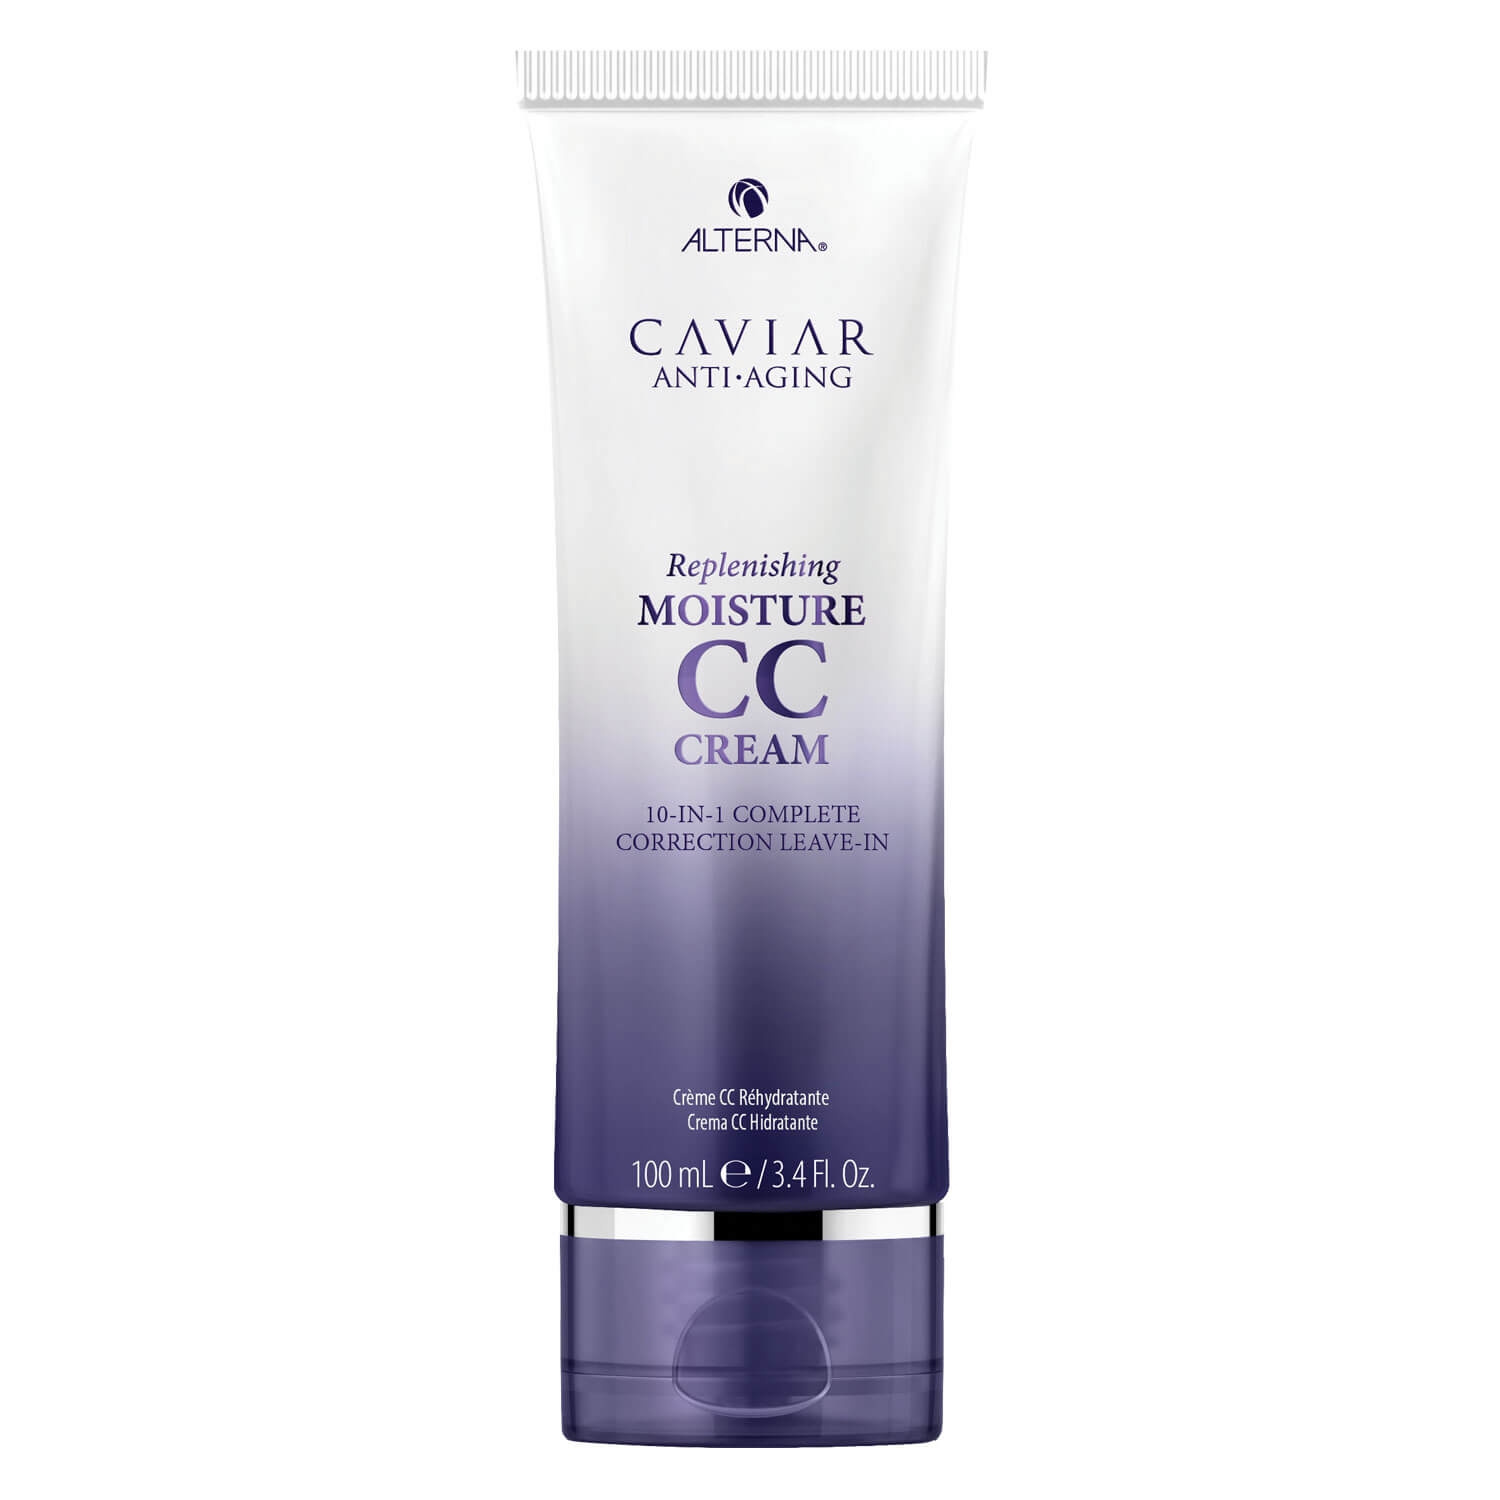 Product image from Caviar Anti Aging - Replenishing Moisture CC Cream